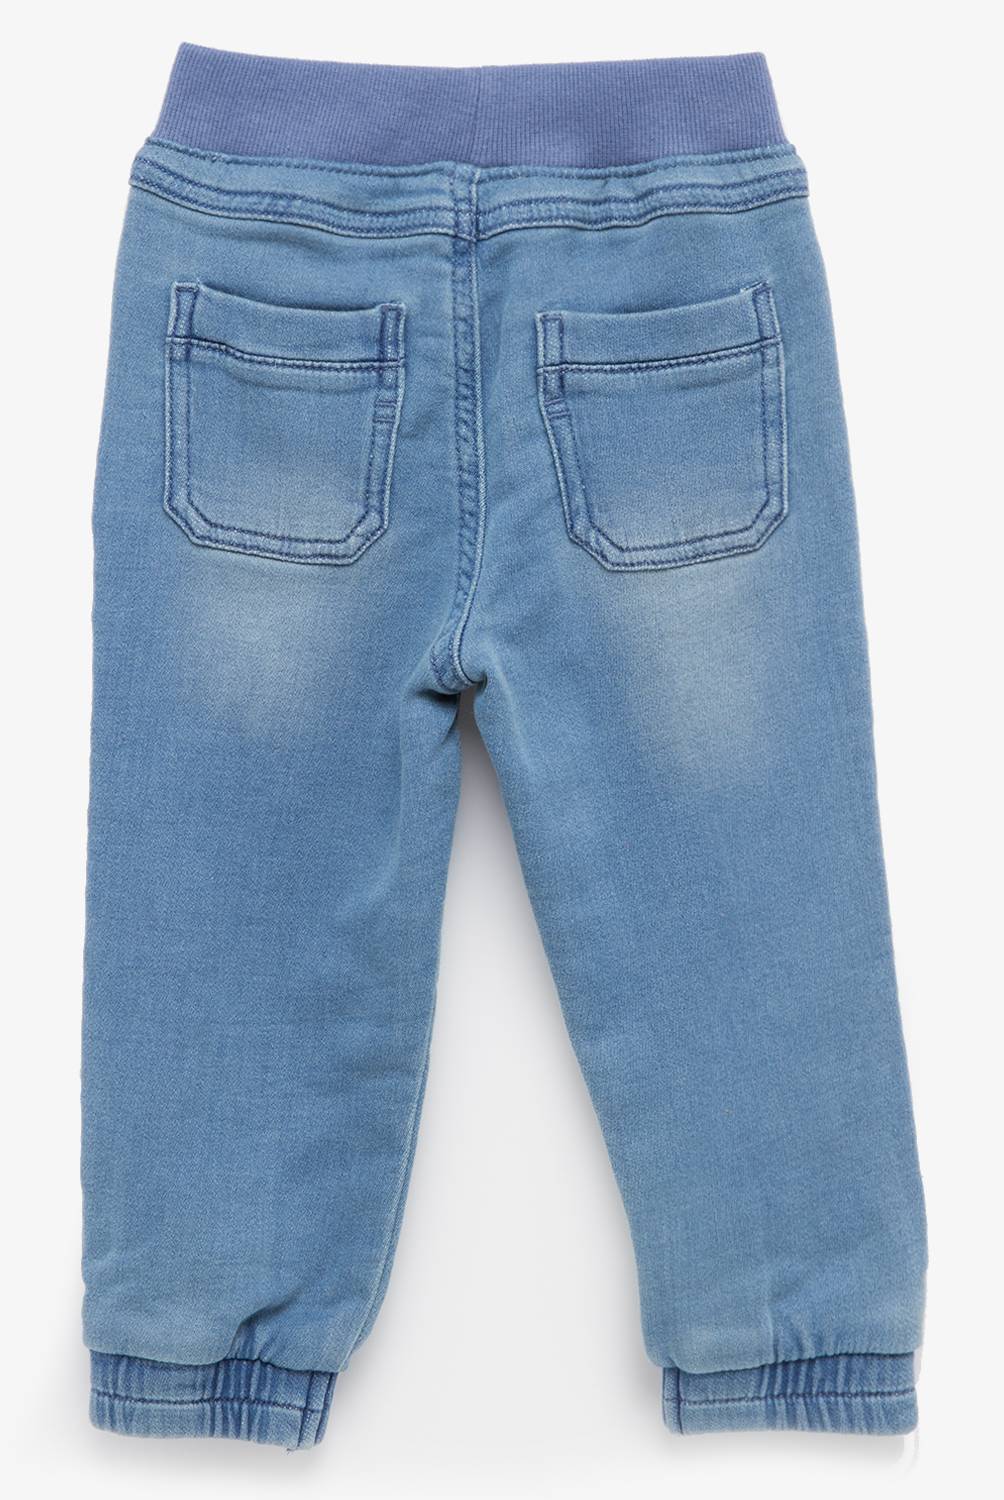 YAMP - Jeans Cintura Elásticada Algodón Bebé Niño Yamp